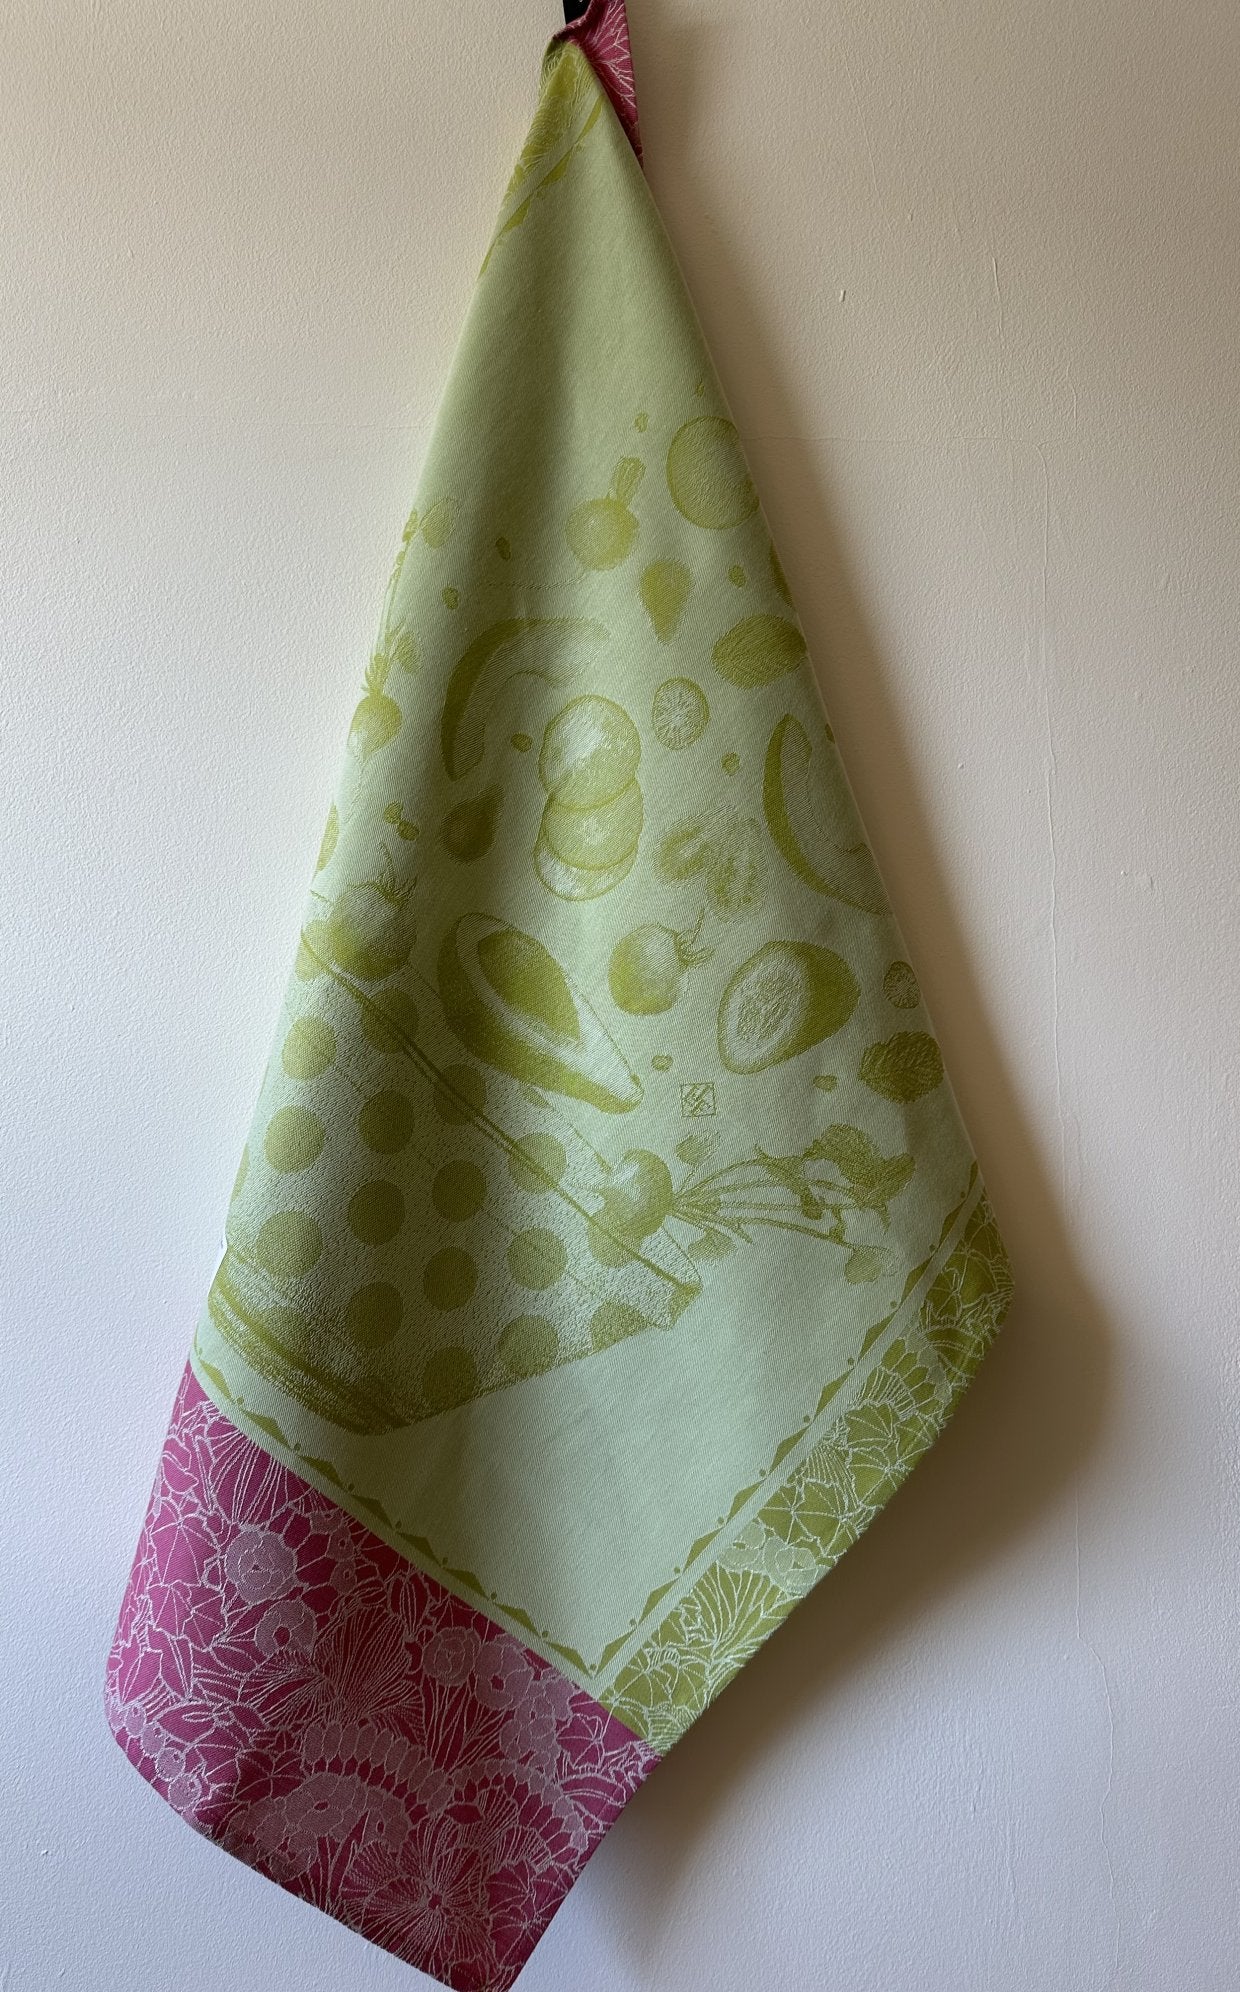 Jacquard Francais "Salade d’Ete" (Green), Woven cotton tea towel. Made in France.